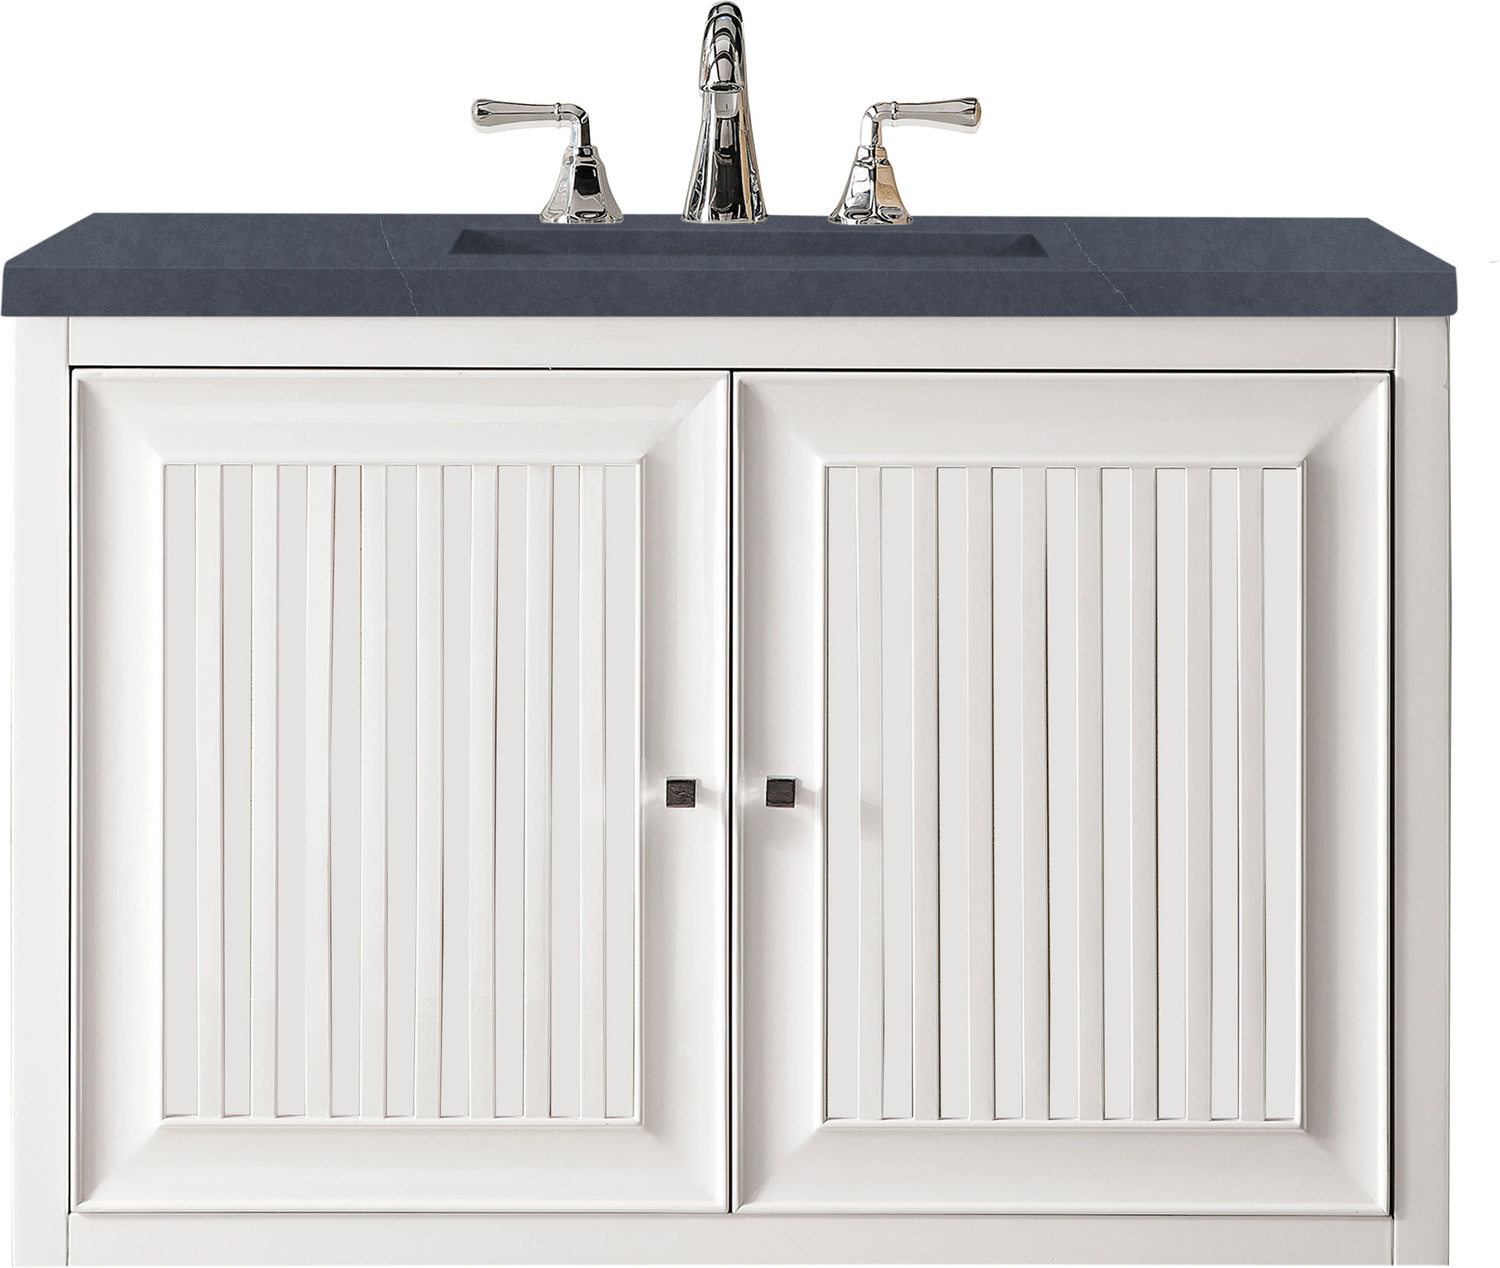 60 inch single sink bathroom vanity James Martin Vanity Glossy White Traditional